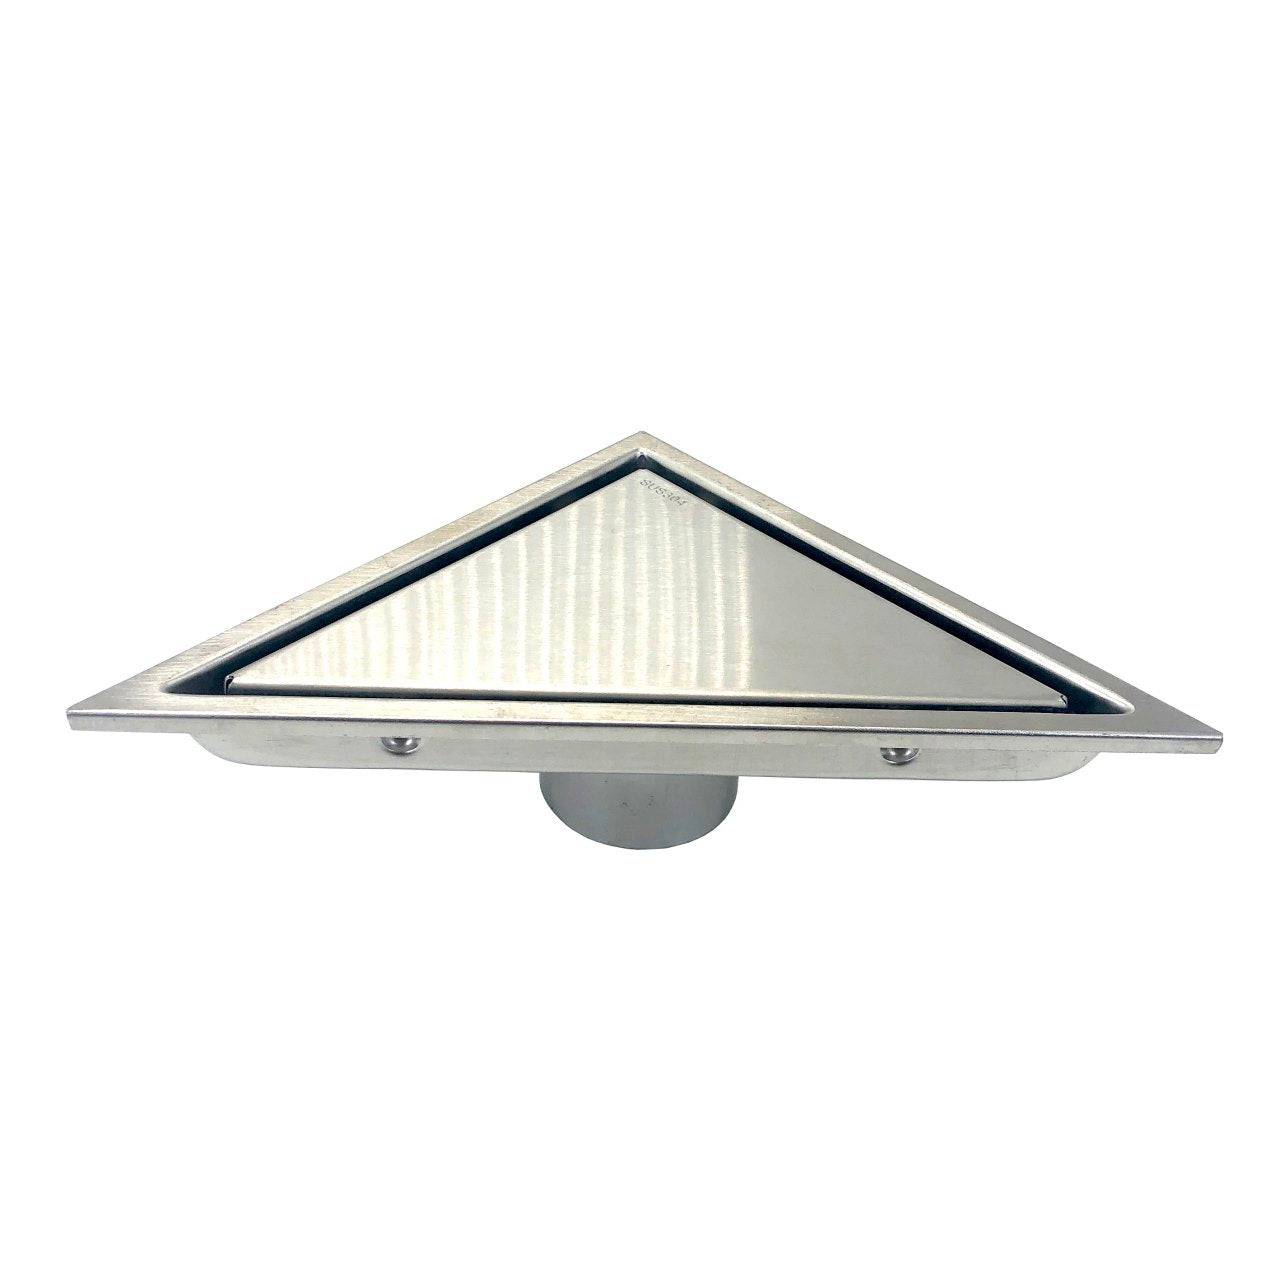 Kube Bath 6.5" Triangle Stainless Steel Tile Grate Shower Drain – Chrome - Renoz